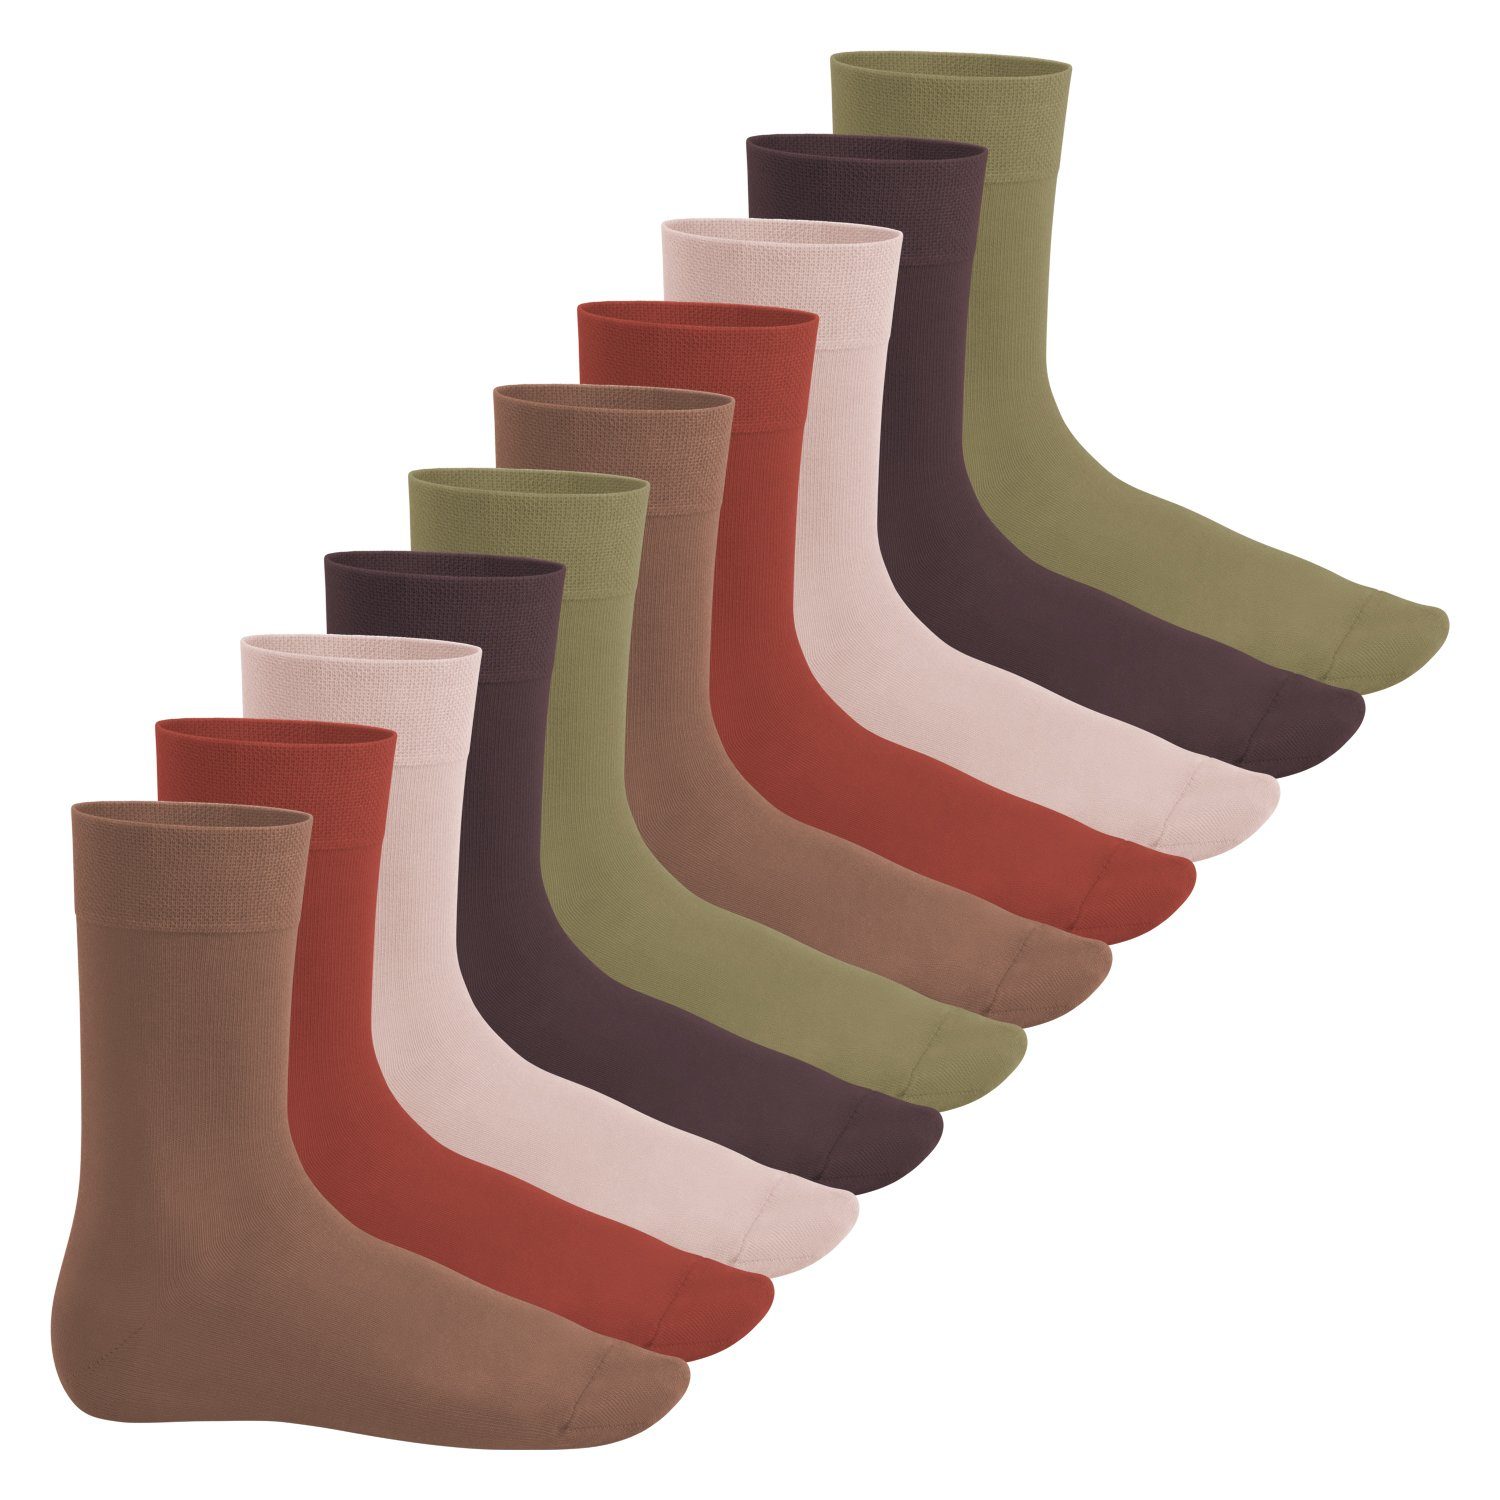 Footstar Basicsocken Everyday! Herren & Damen Socken (10 Paar) mit Baumwolle Herbstfarben